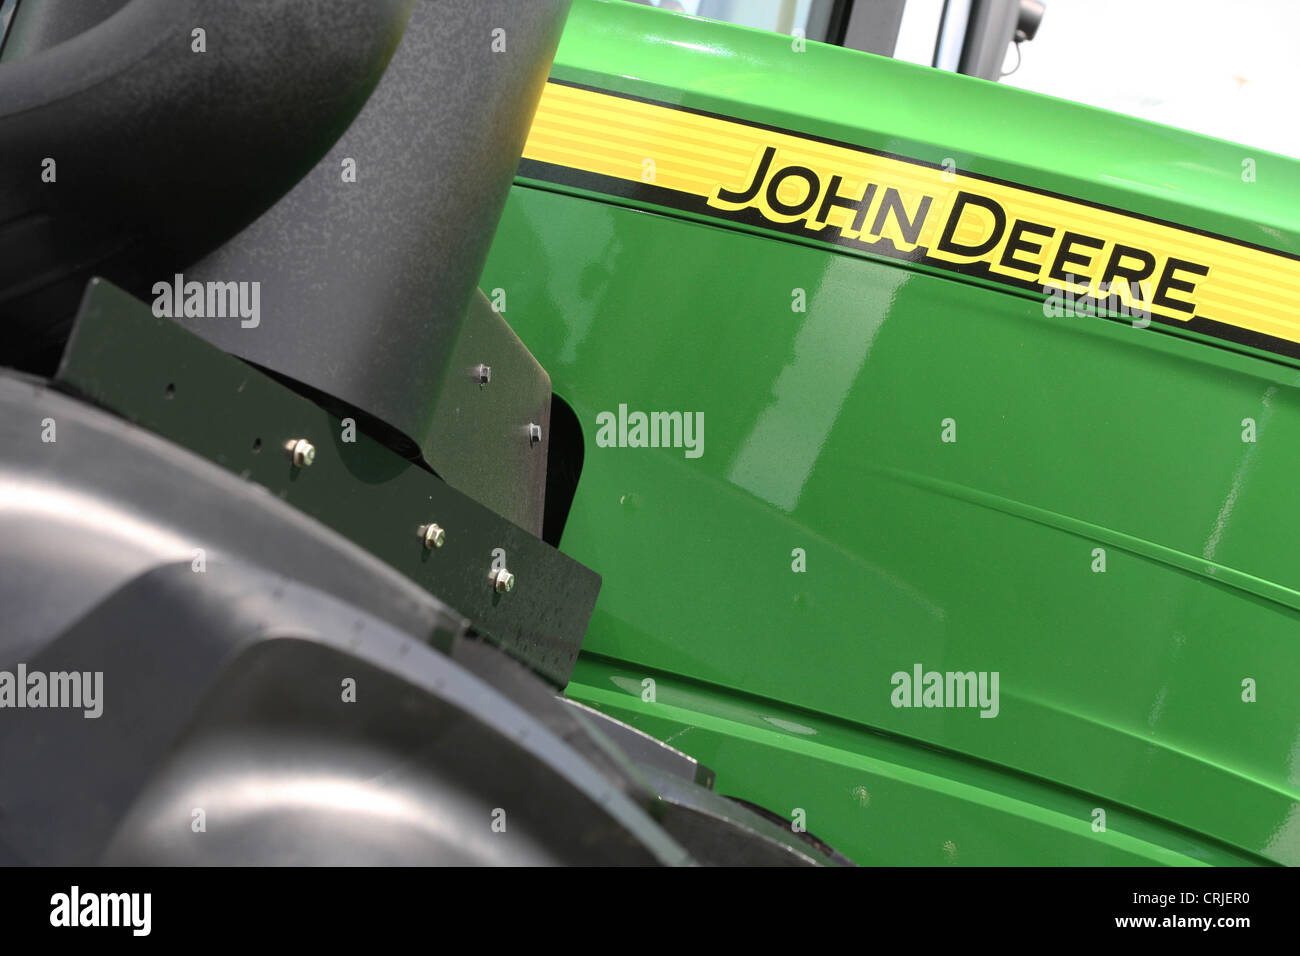 John Deere Corporate Identity Stock Photo